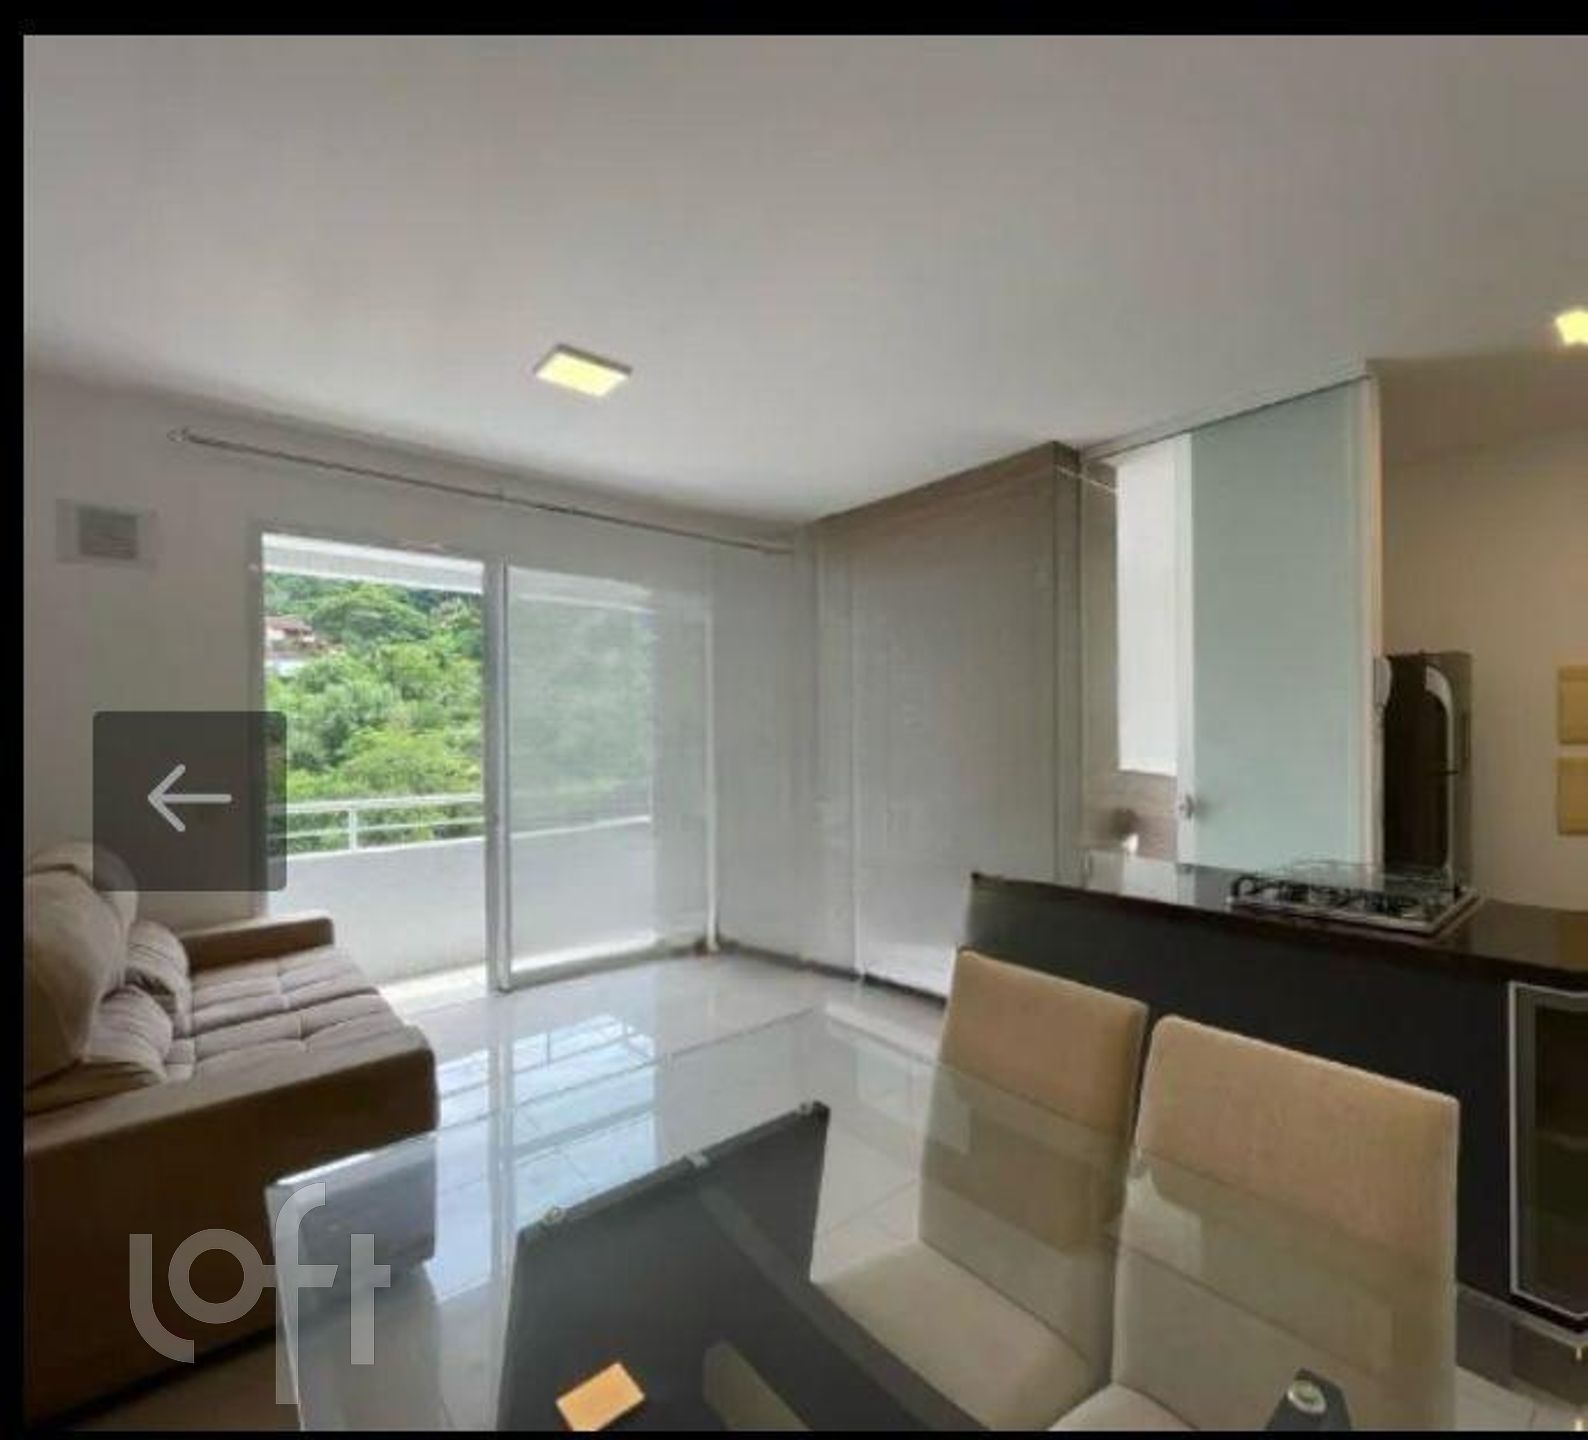 VENDA &#8211; Apartamento de 1 quarto no bairro Itacorubi, Florianópolis &#8211; PUr9top1